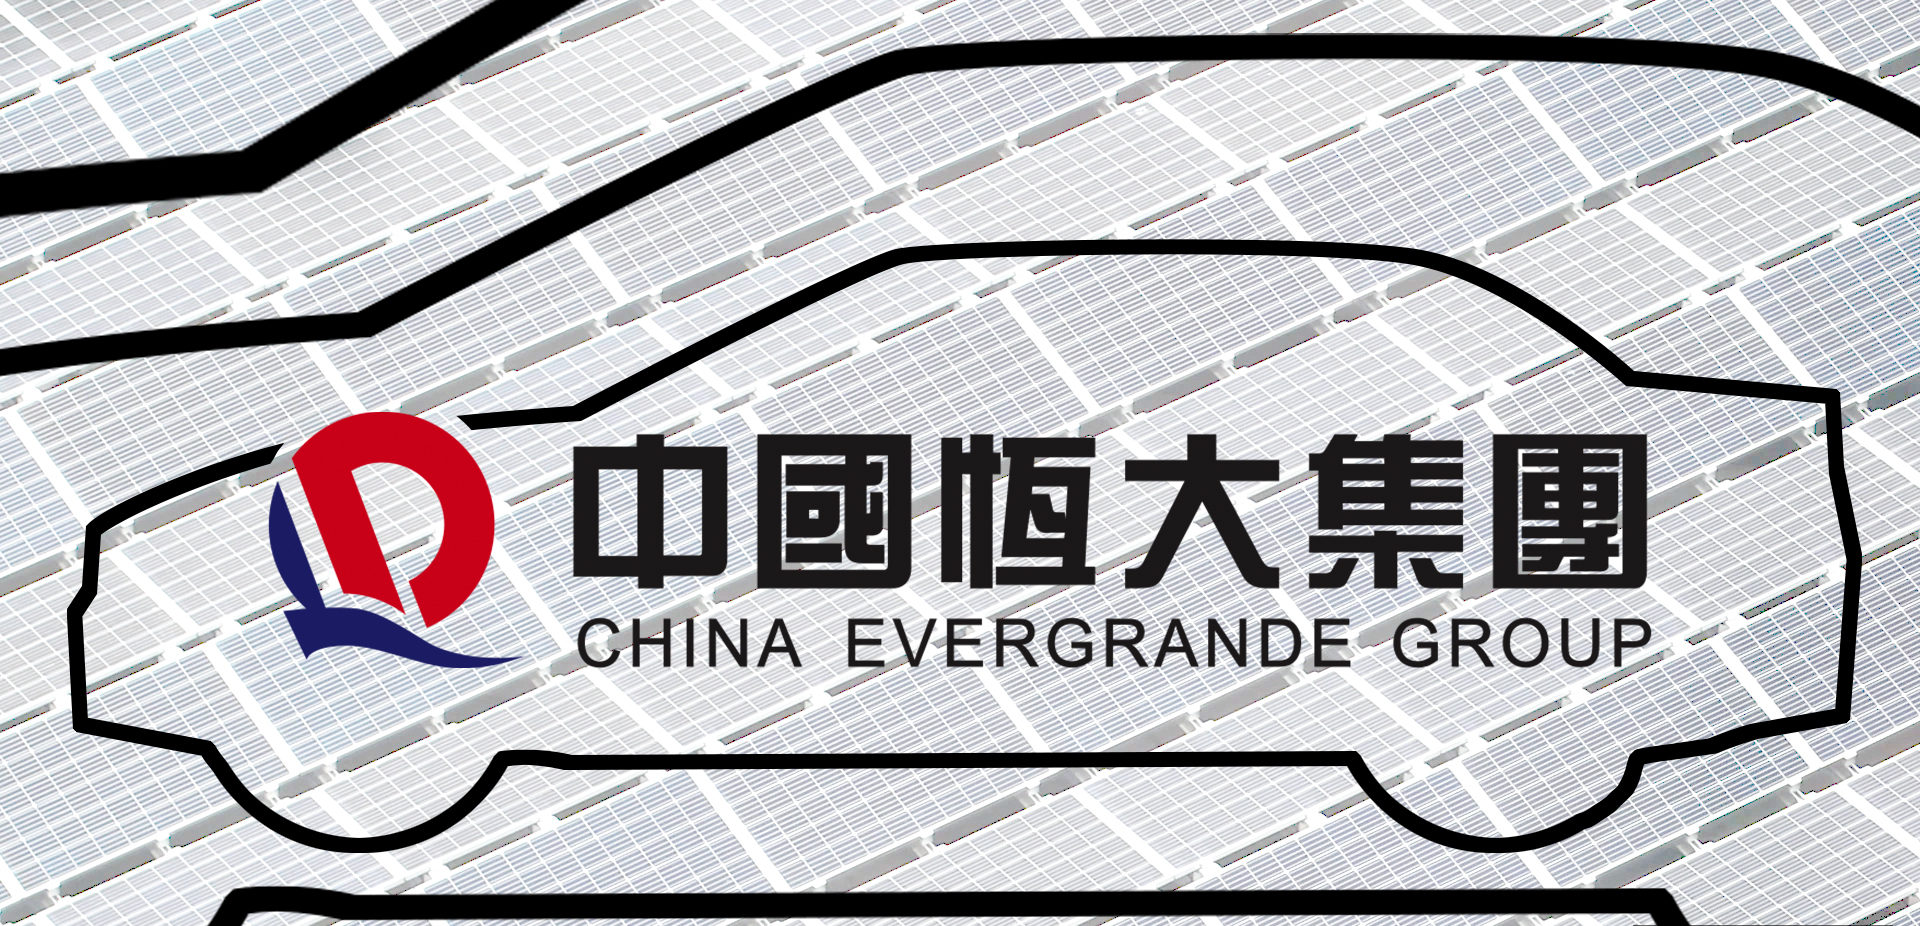 After raising USD 516 million, Evergrande Auto plans to list on the Star Market